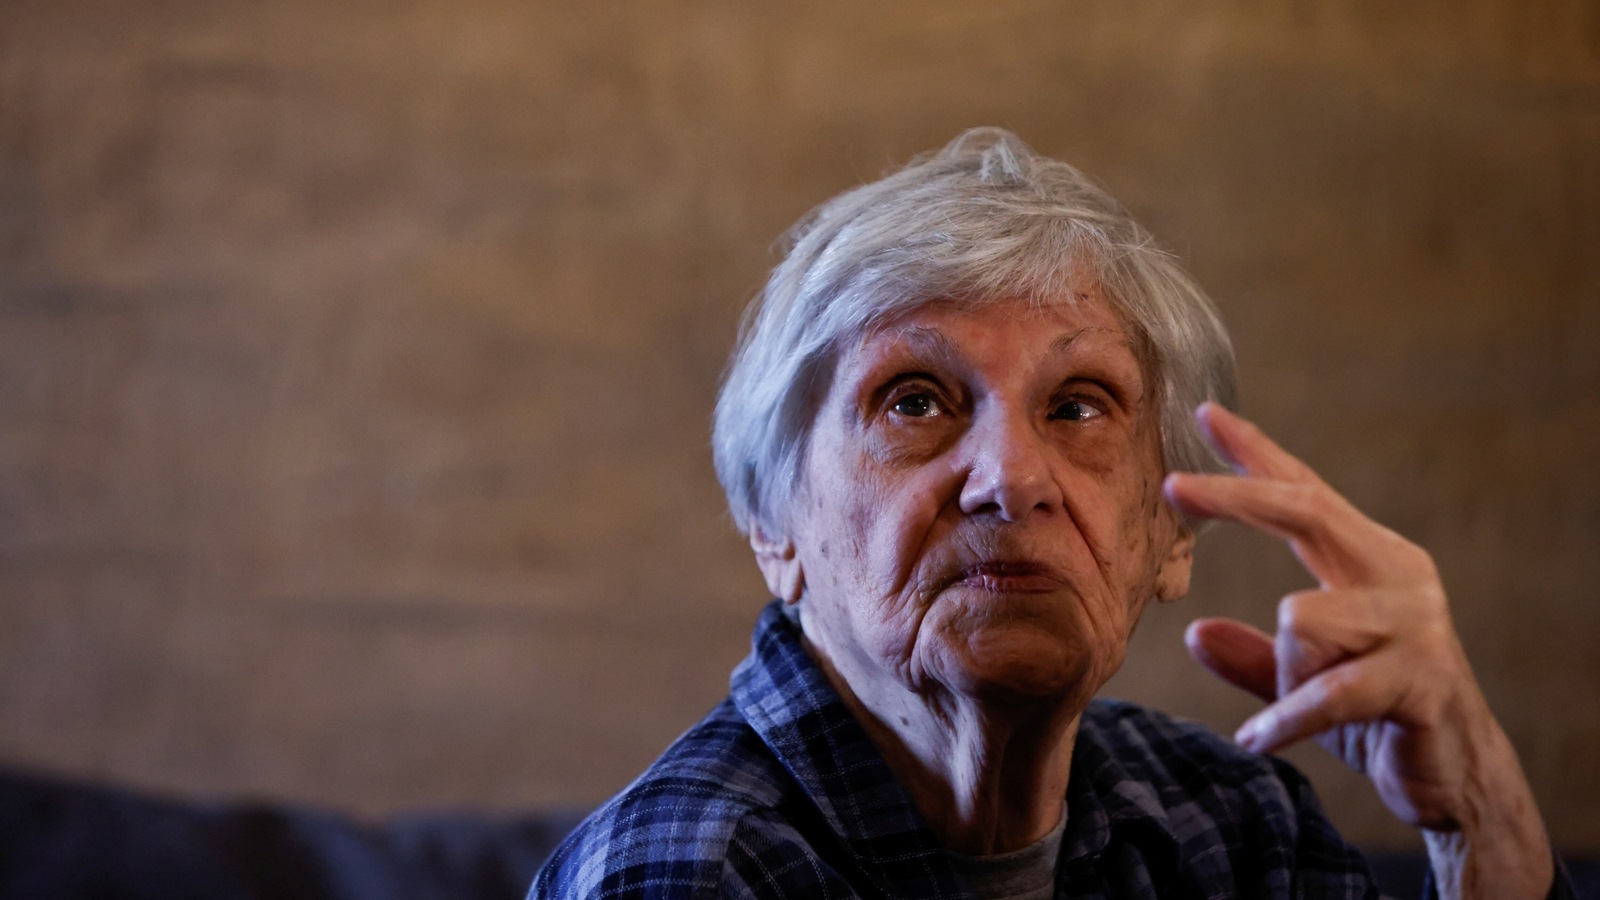 Ukraine Jewish woman, 92, fled Kyiv twice - due to Nazi Germany, then Russia